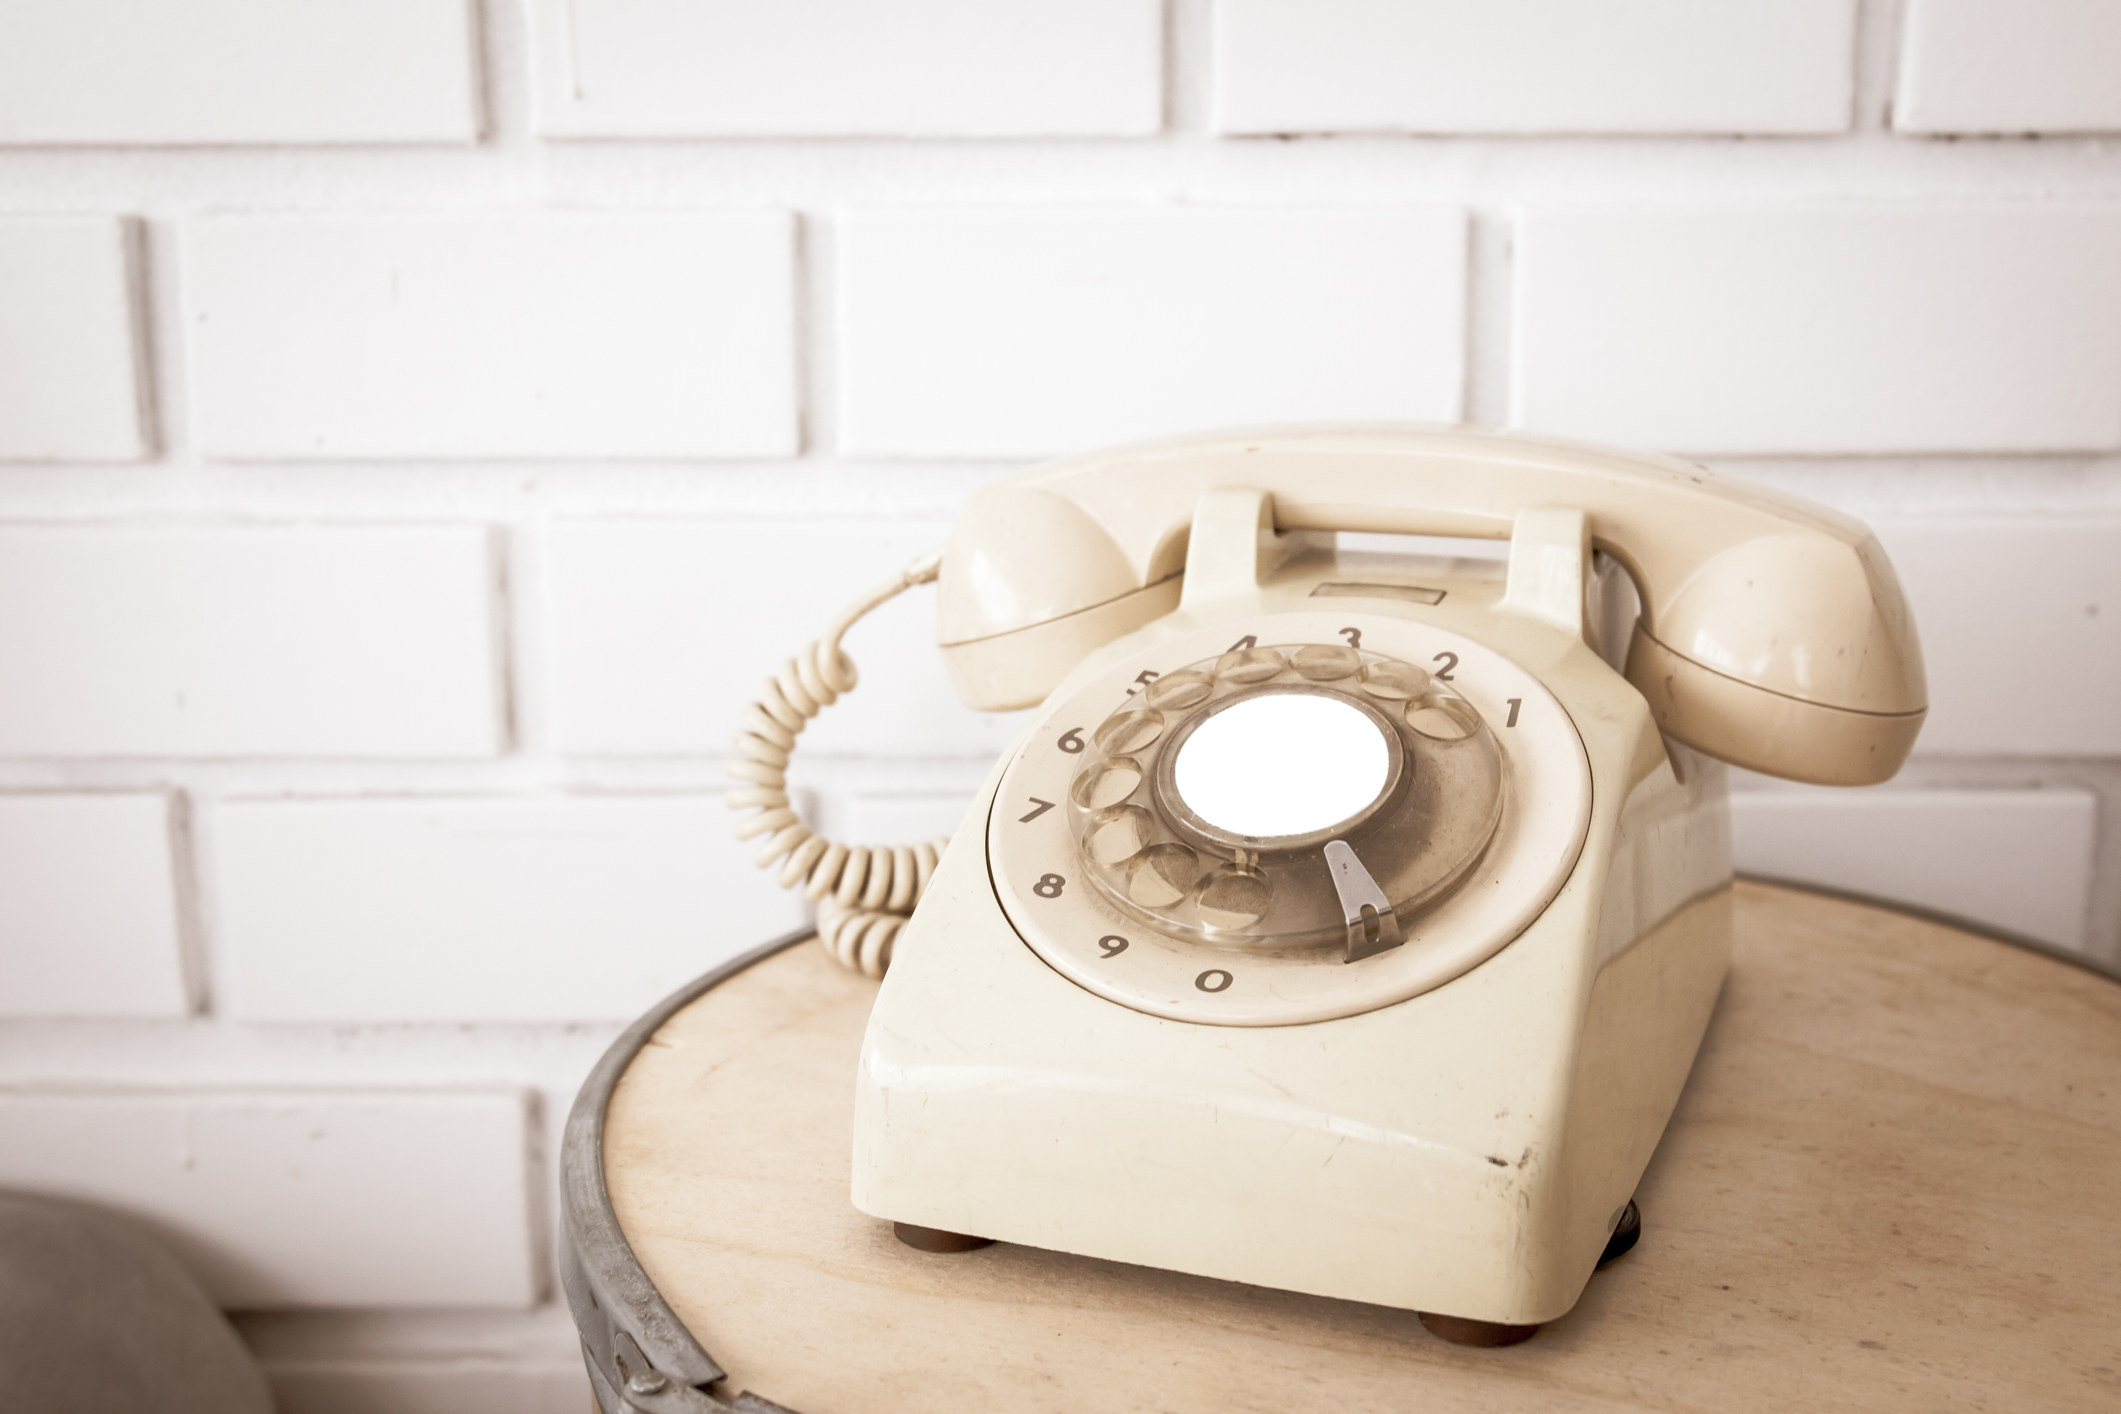 An old-school phone